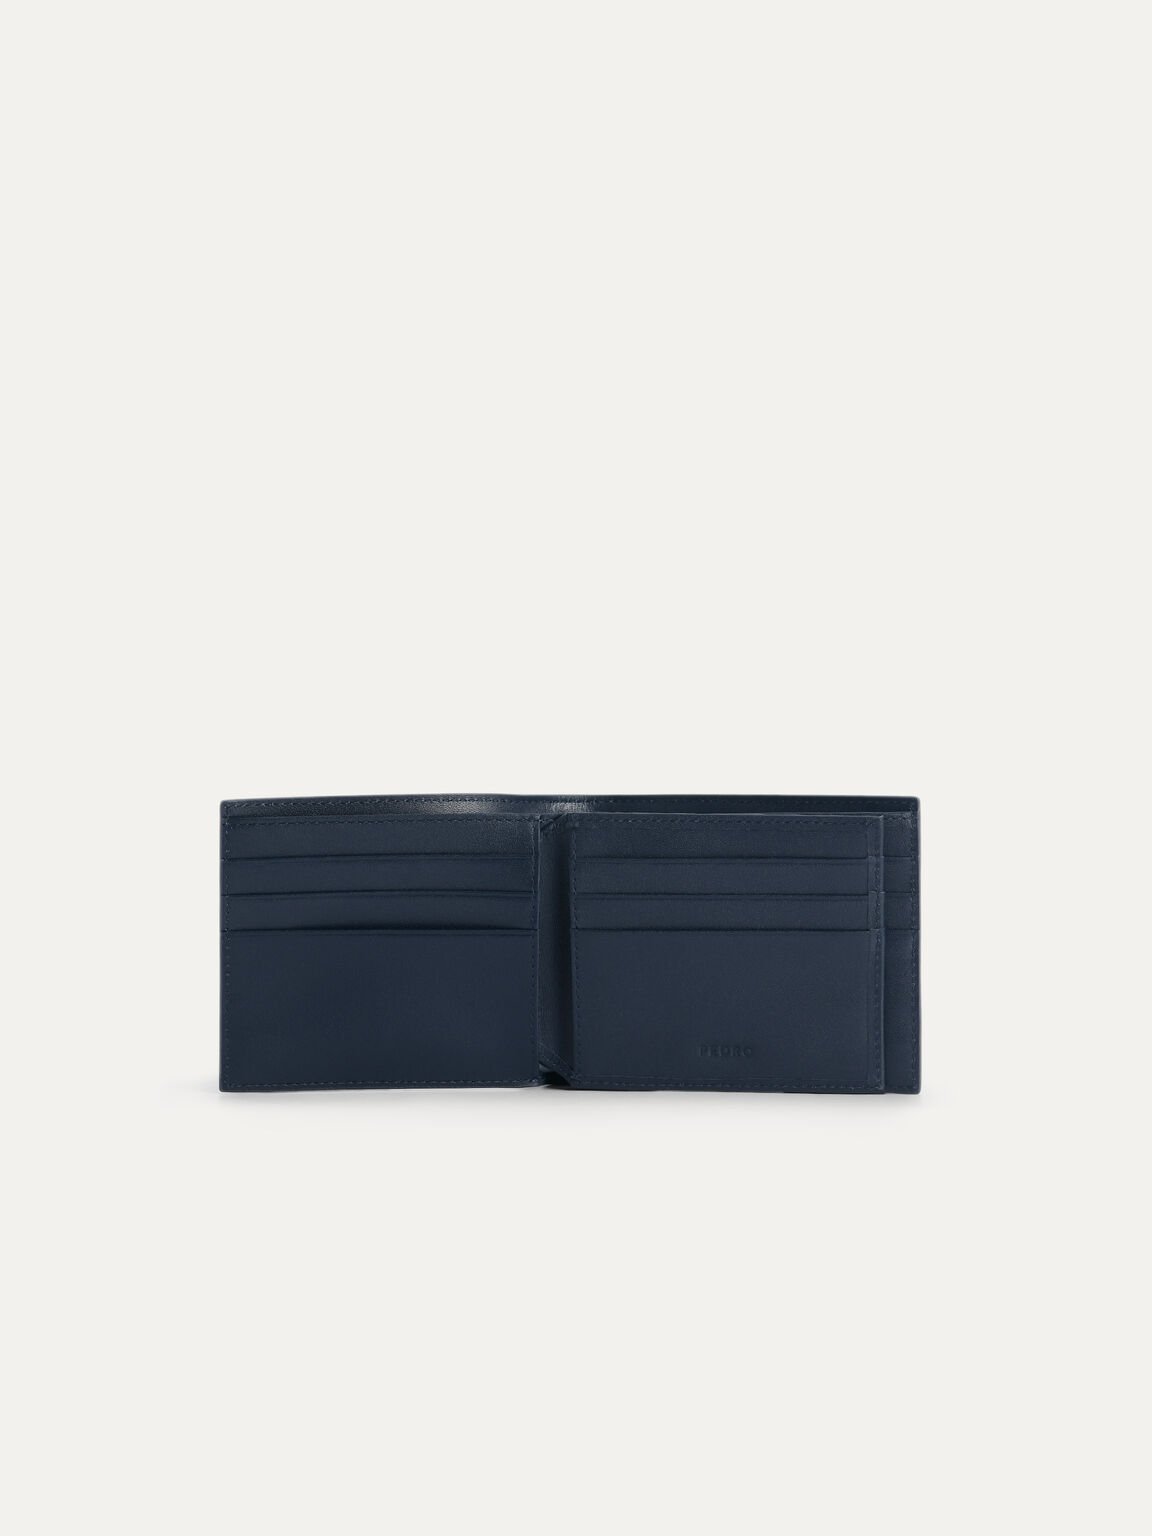 Leather Bi-Fold Wallet with Flip, Navy